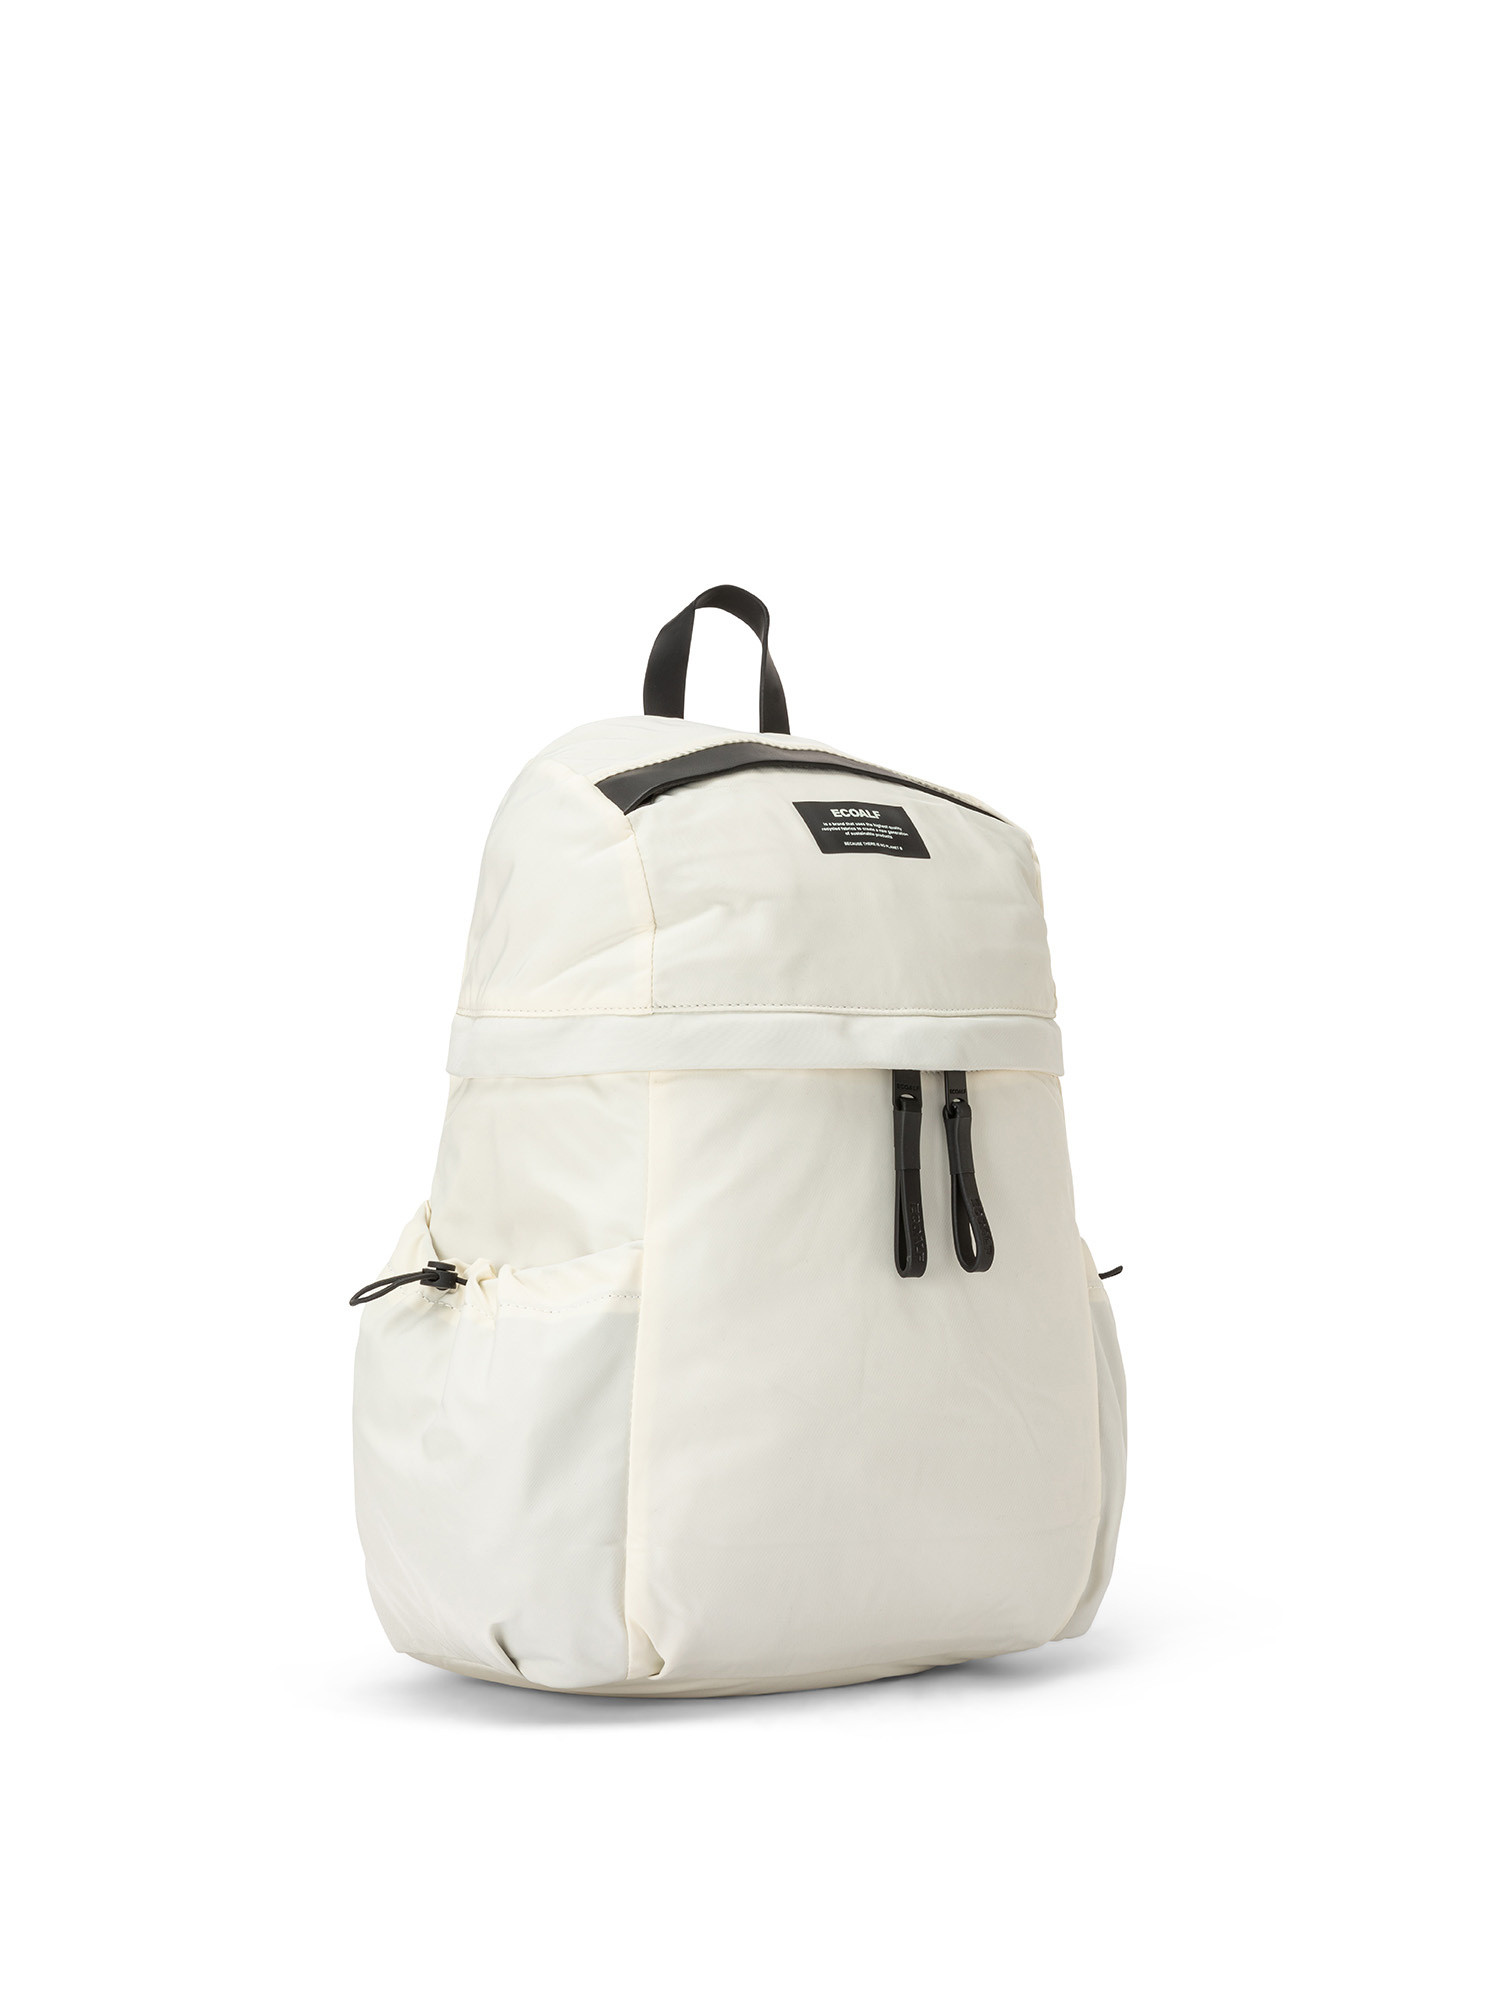 Ecoalf - Waterproof Mom Backpack, White, large image number 1